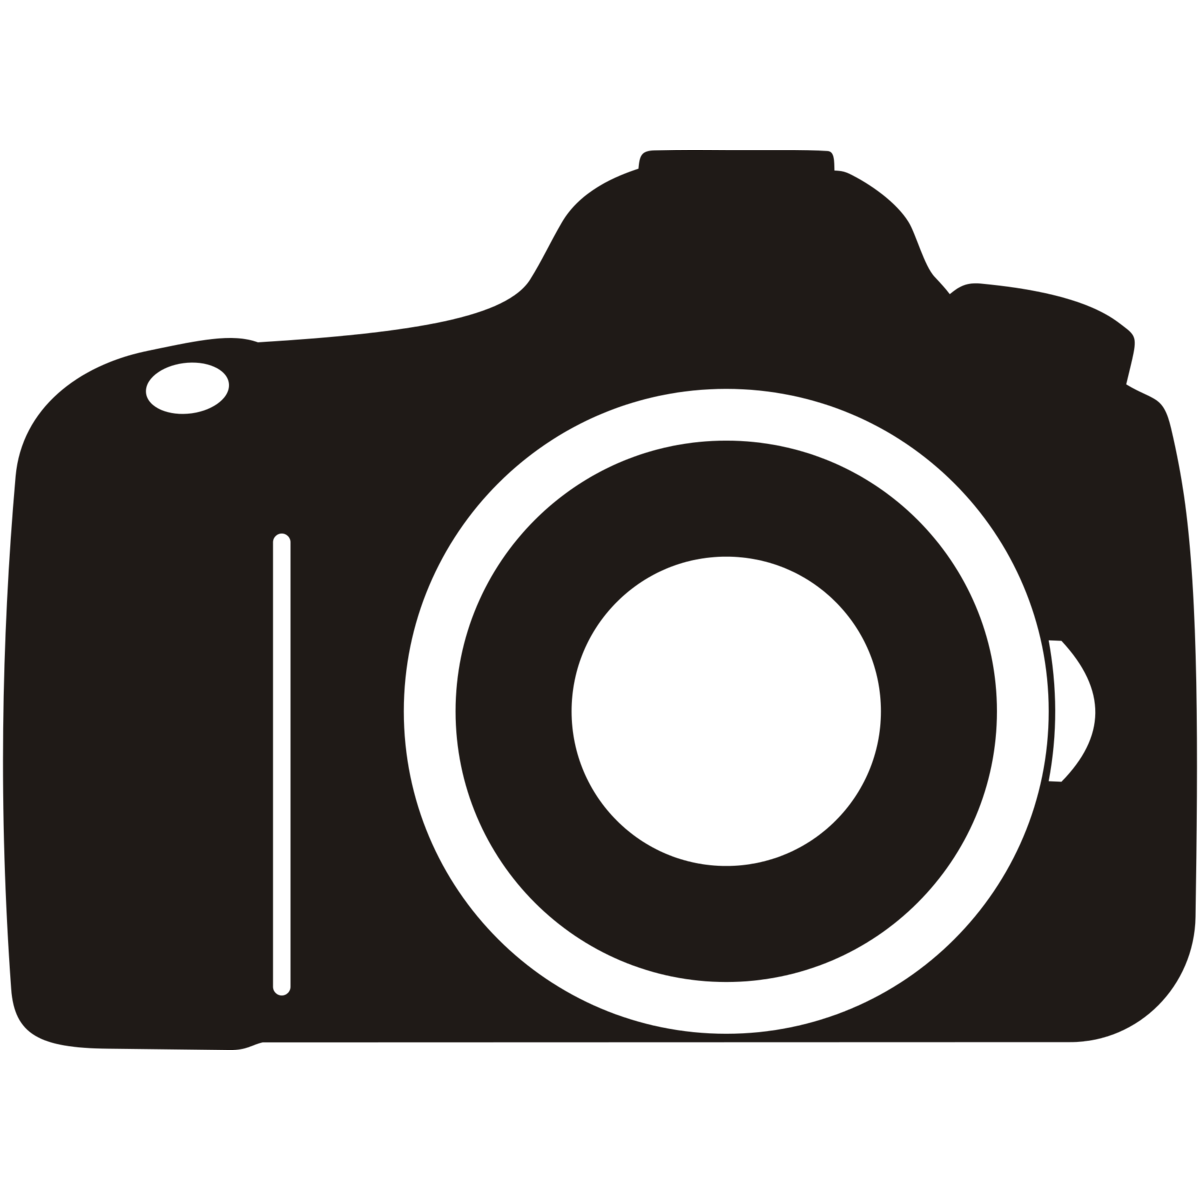 Image for Camera Icon Background Wallpaper. Camera logo, Camera